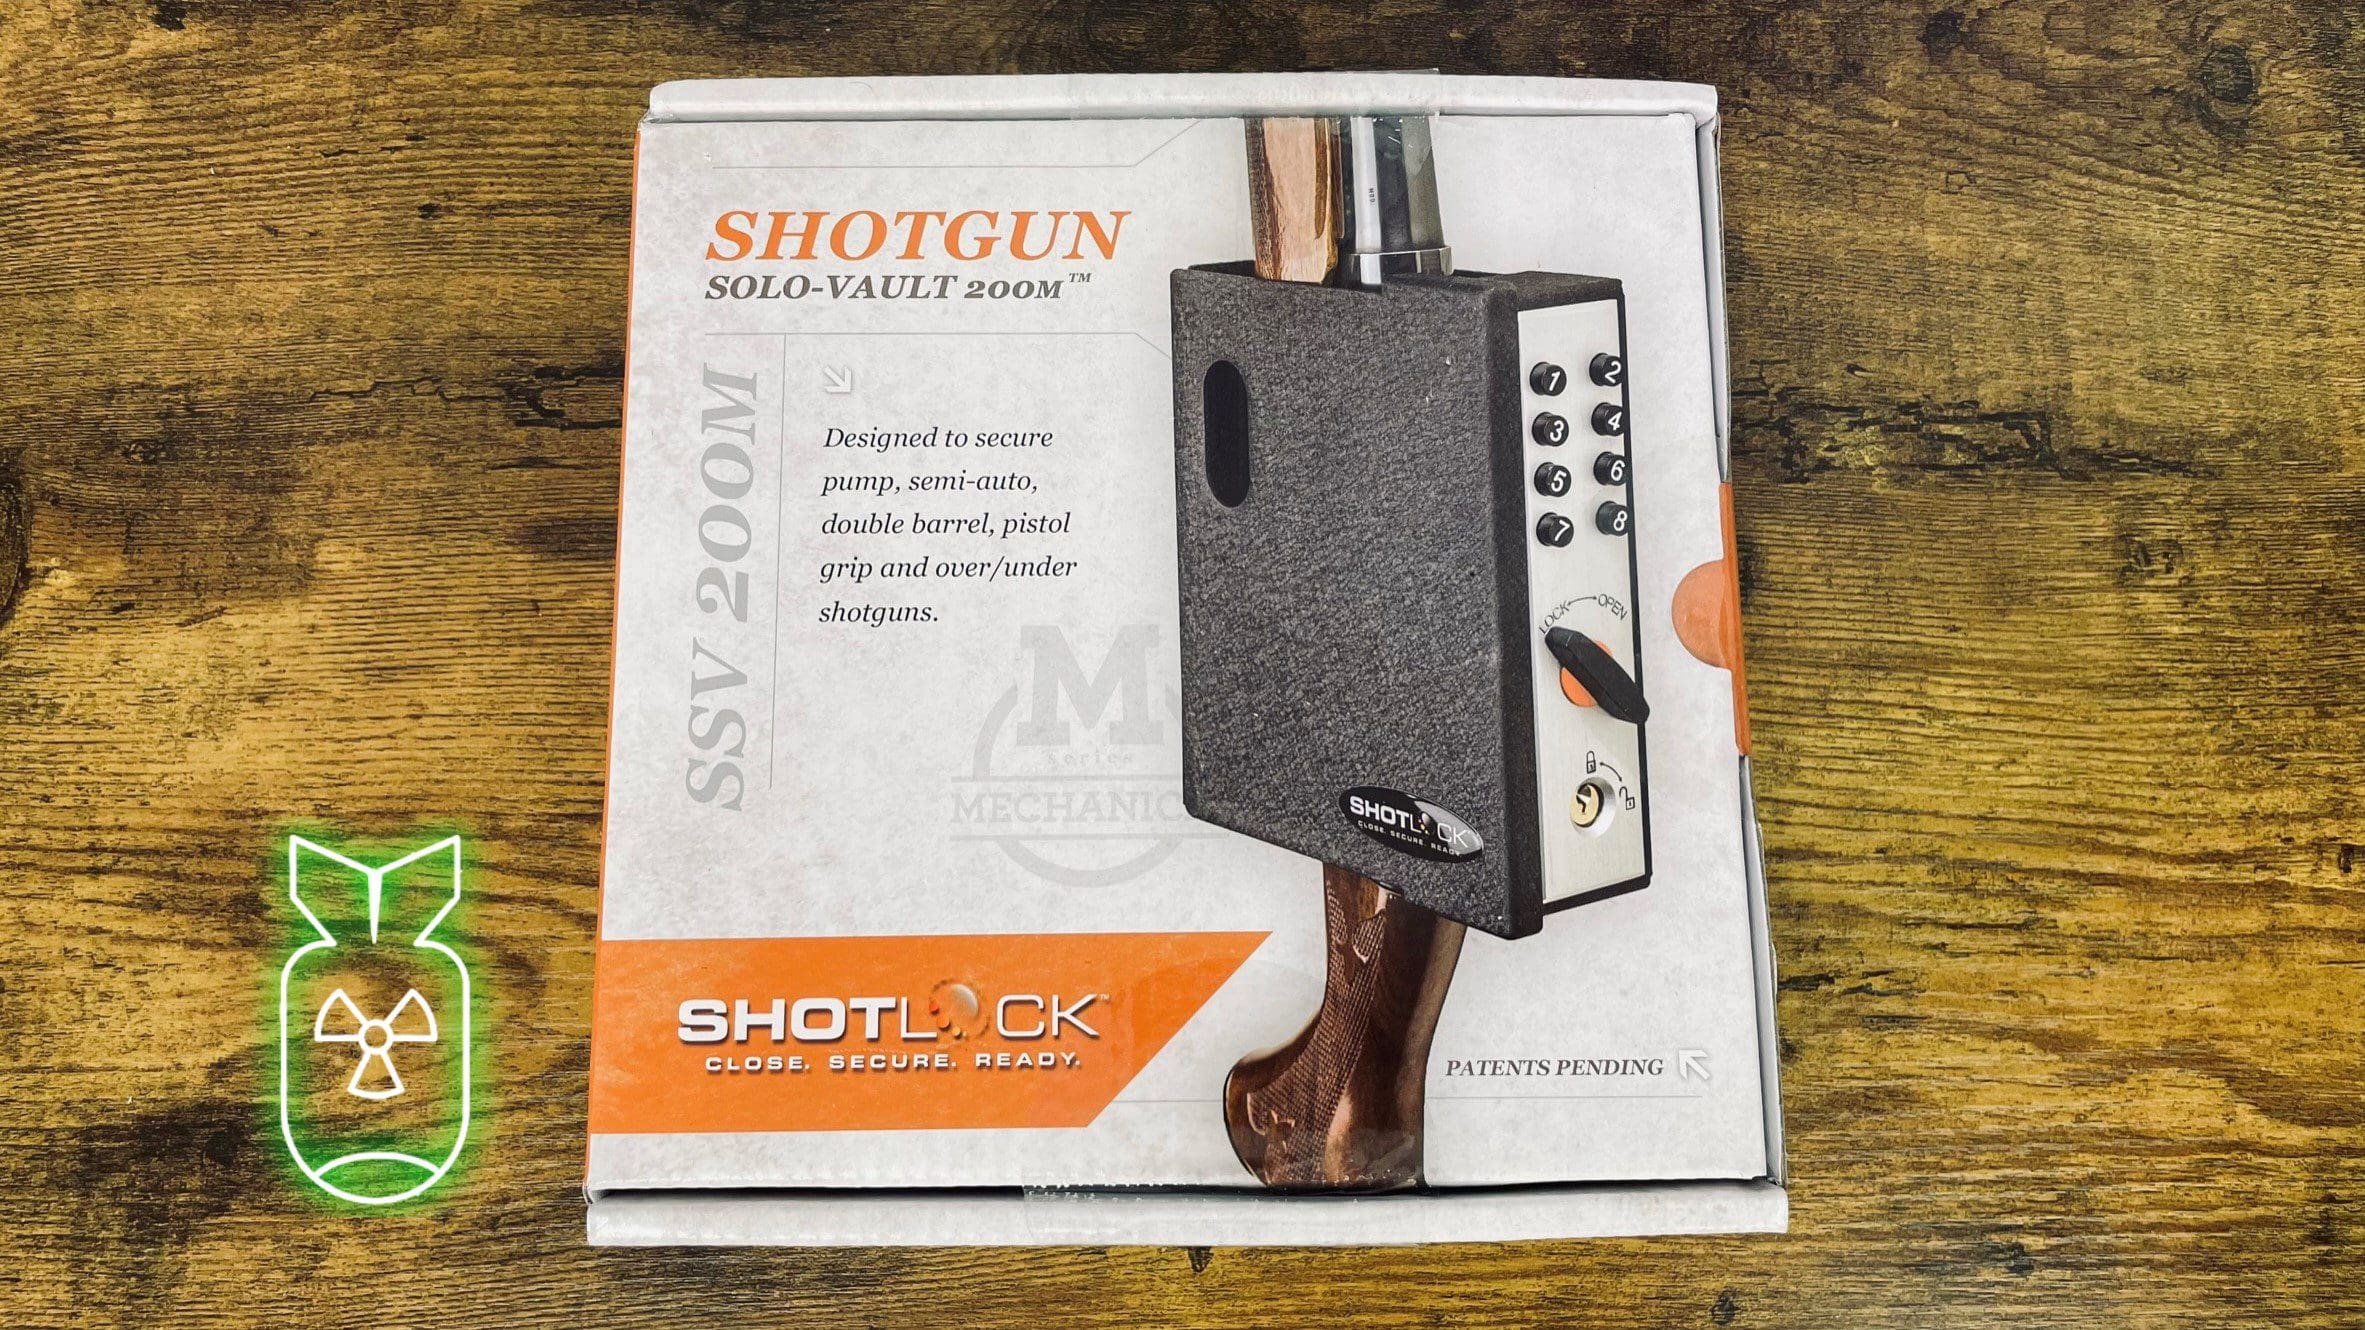 ShotLock 200M Solo-Vault Shotgun Safe